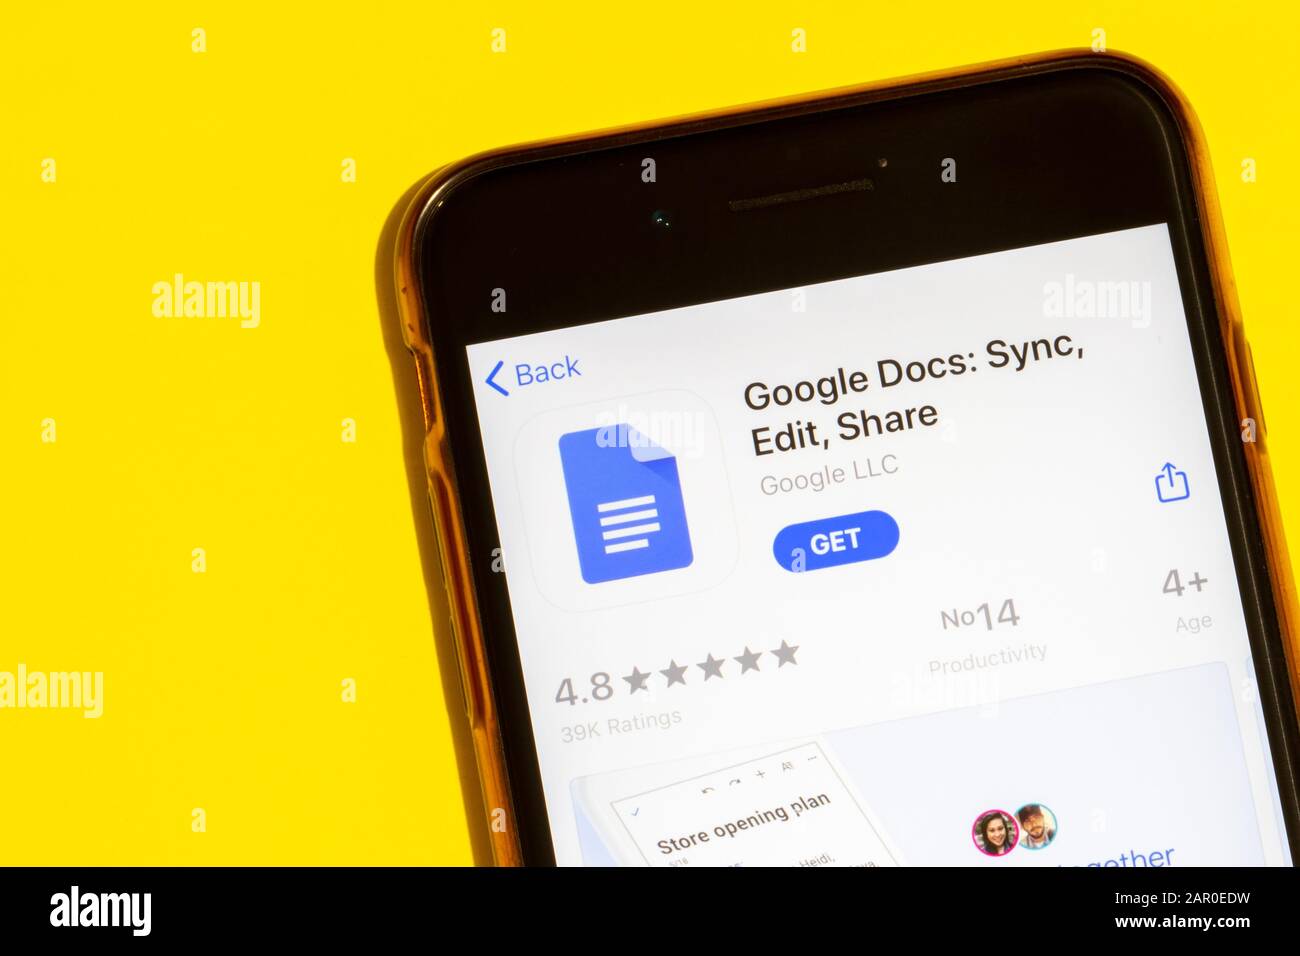 Los Angeles, California, USA - 22 January 2020: Google Docs logo on phone screen flat lay with yellow background, Illustrative Editorial Stock Photo